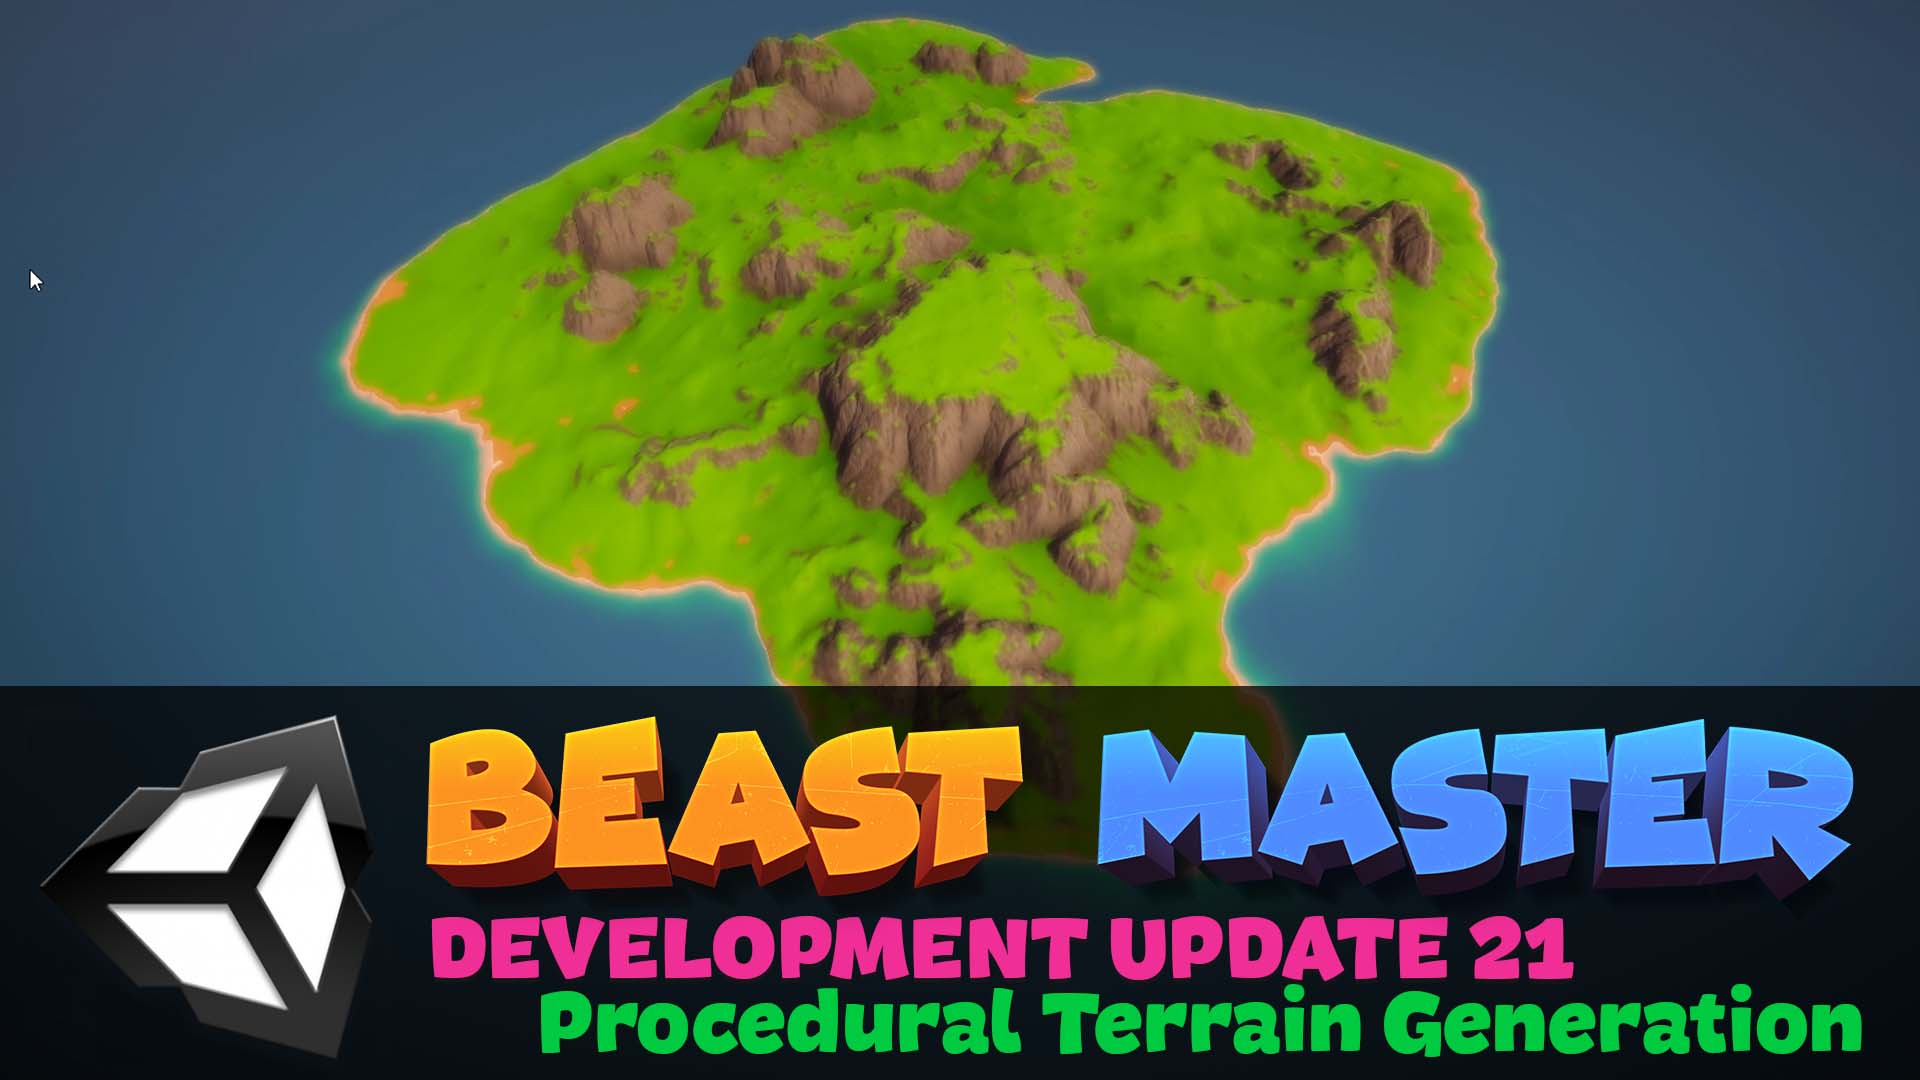 Master Development. Master beast